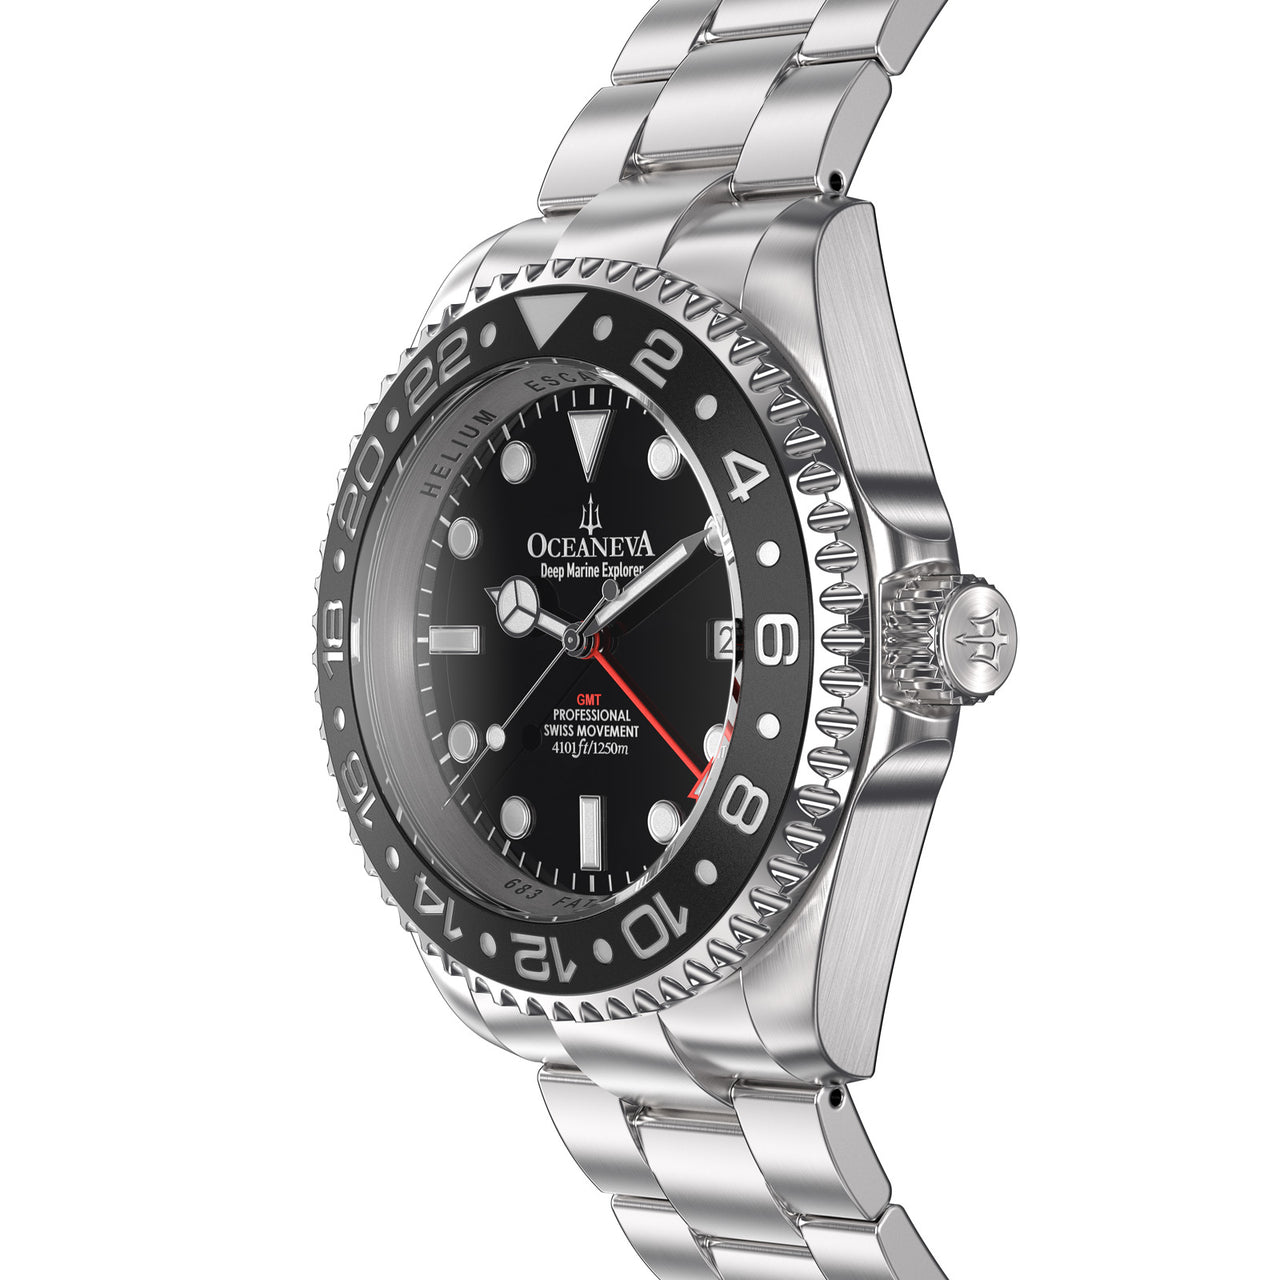 Oceaneva 1250M GMT Dive Watch Black Side View Crown